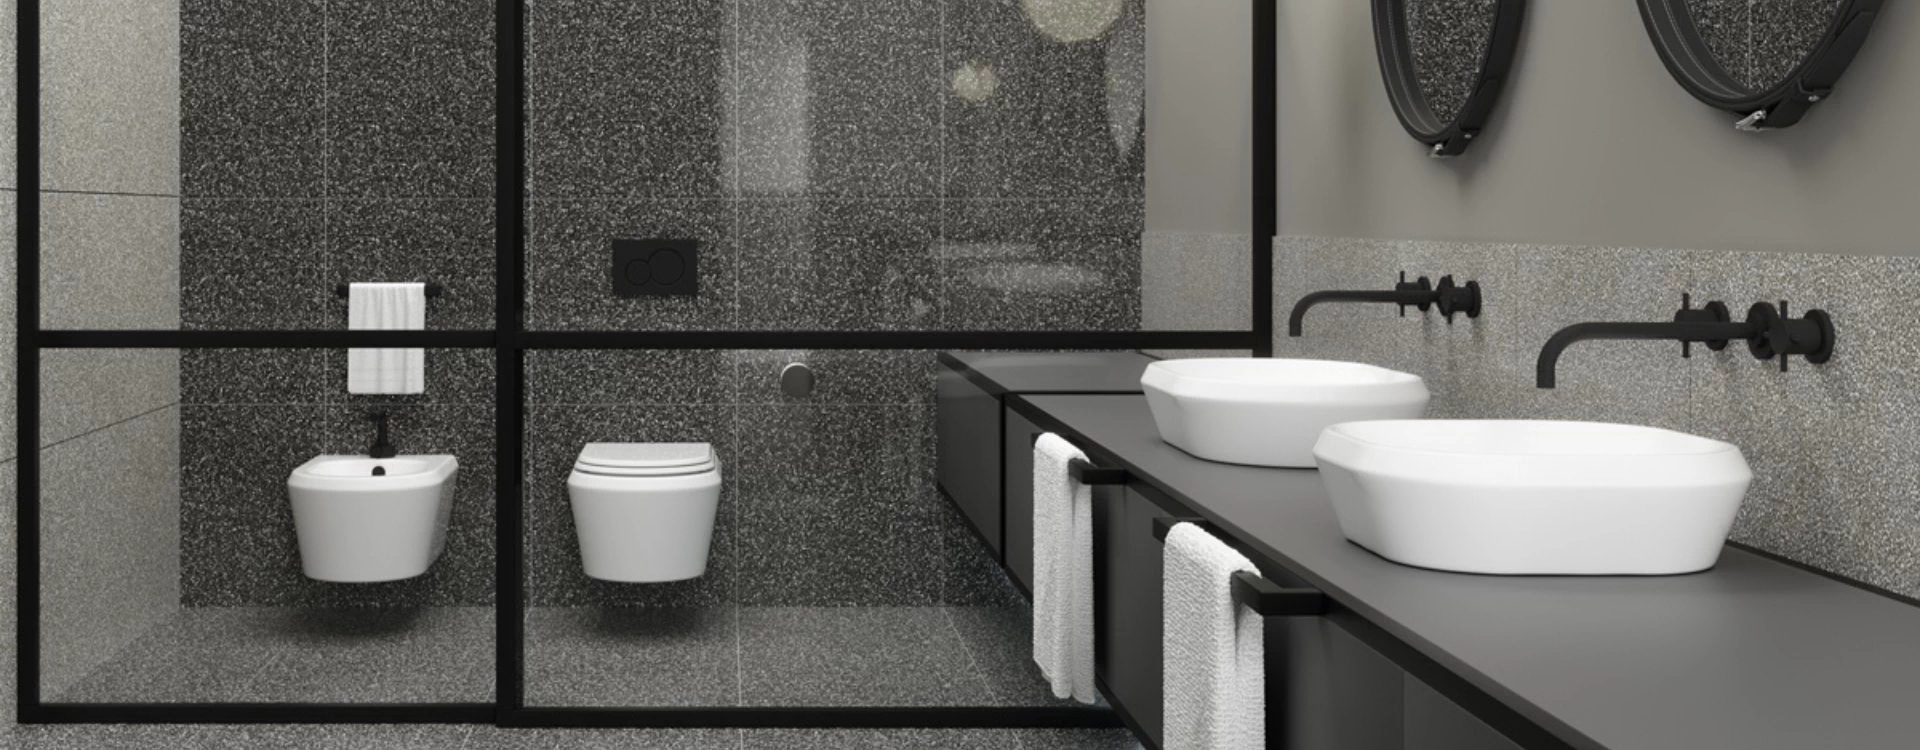 Sanitari bagno GSG Ceramic Design Torino - Icos per la Casa